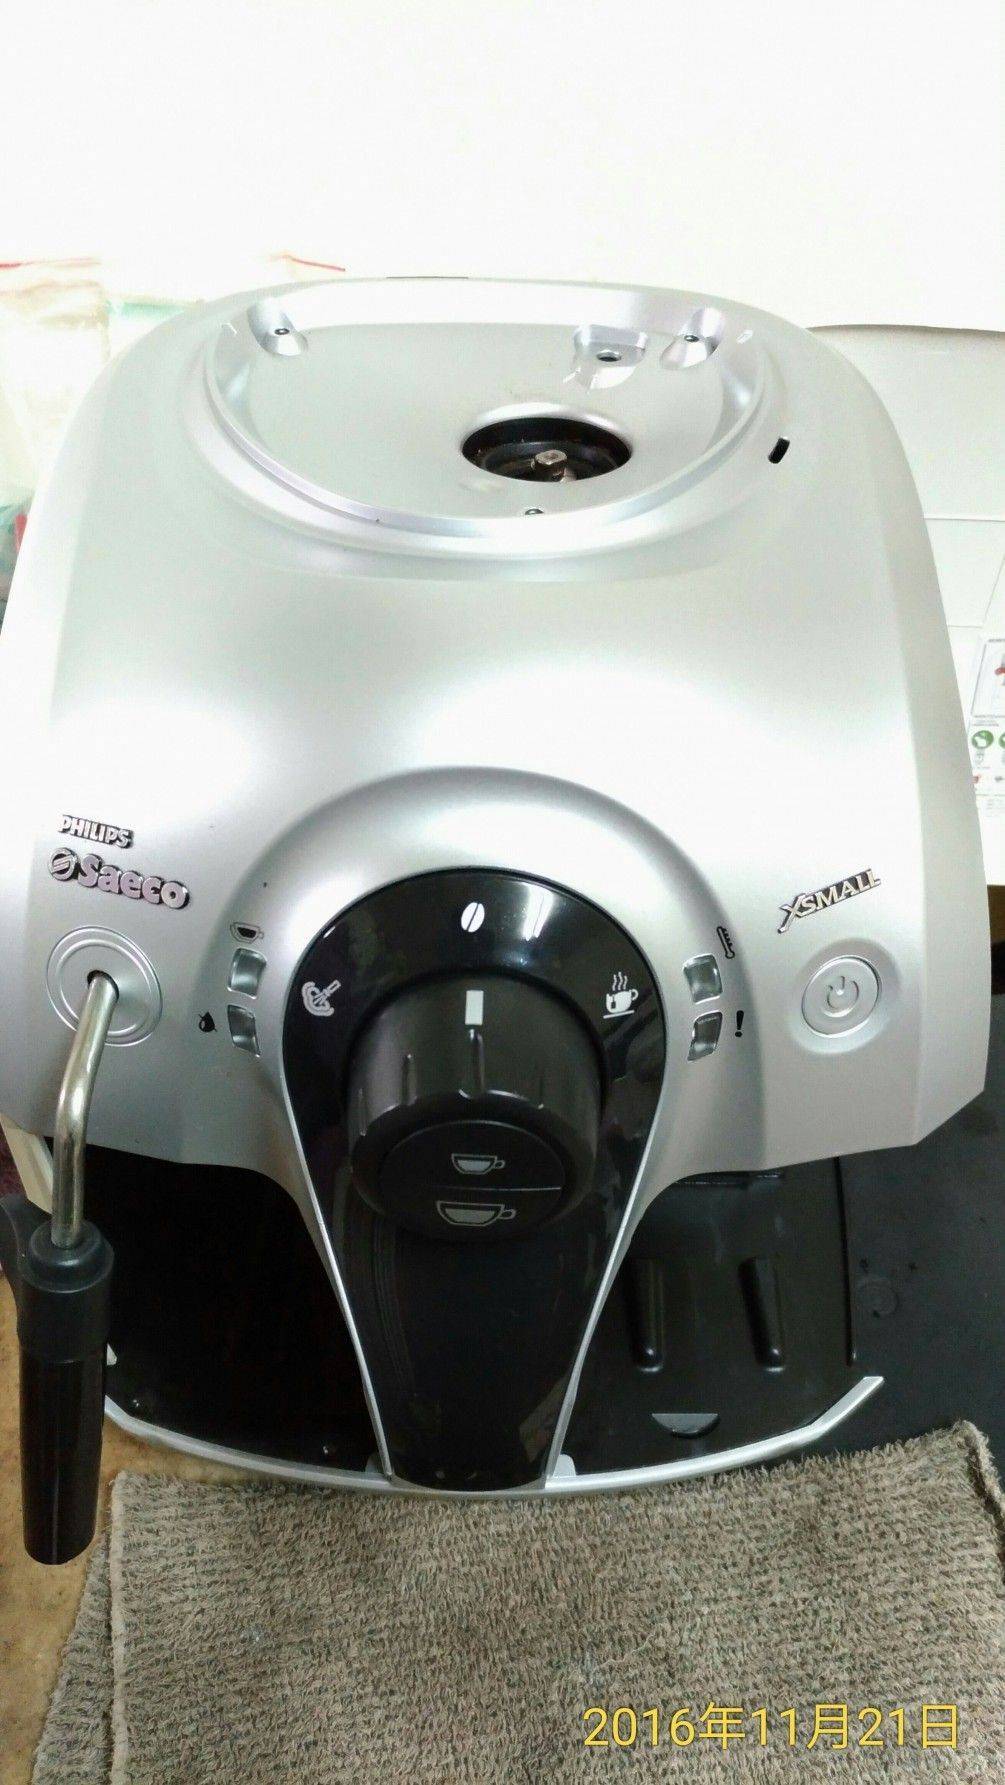 saeco-xsmall全自動咖啡機維修保養 虎尾蘇先生105.11.22處理